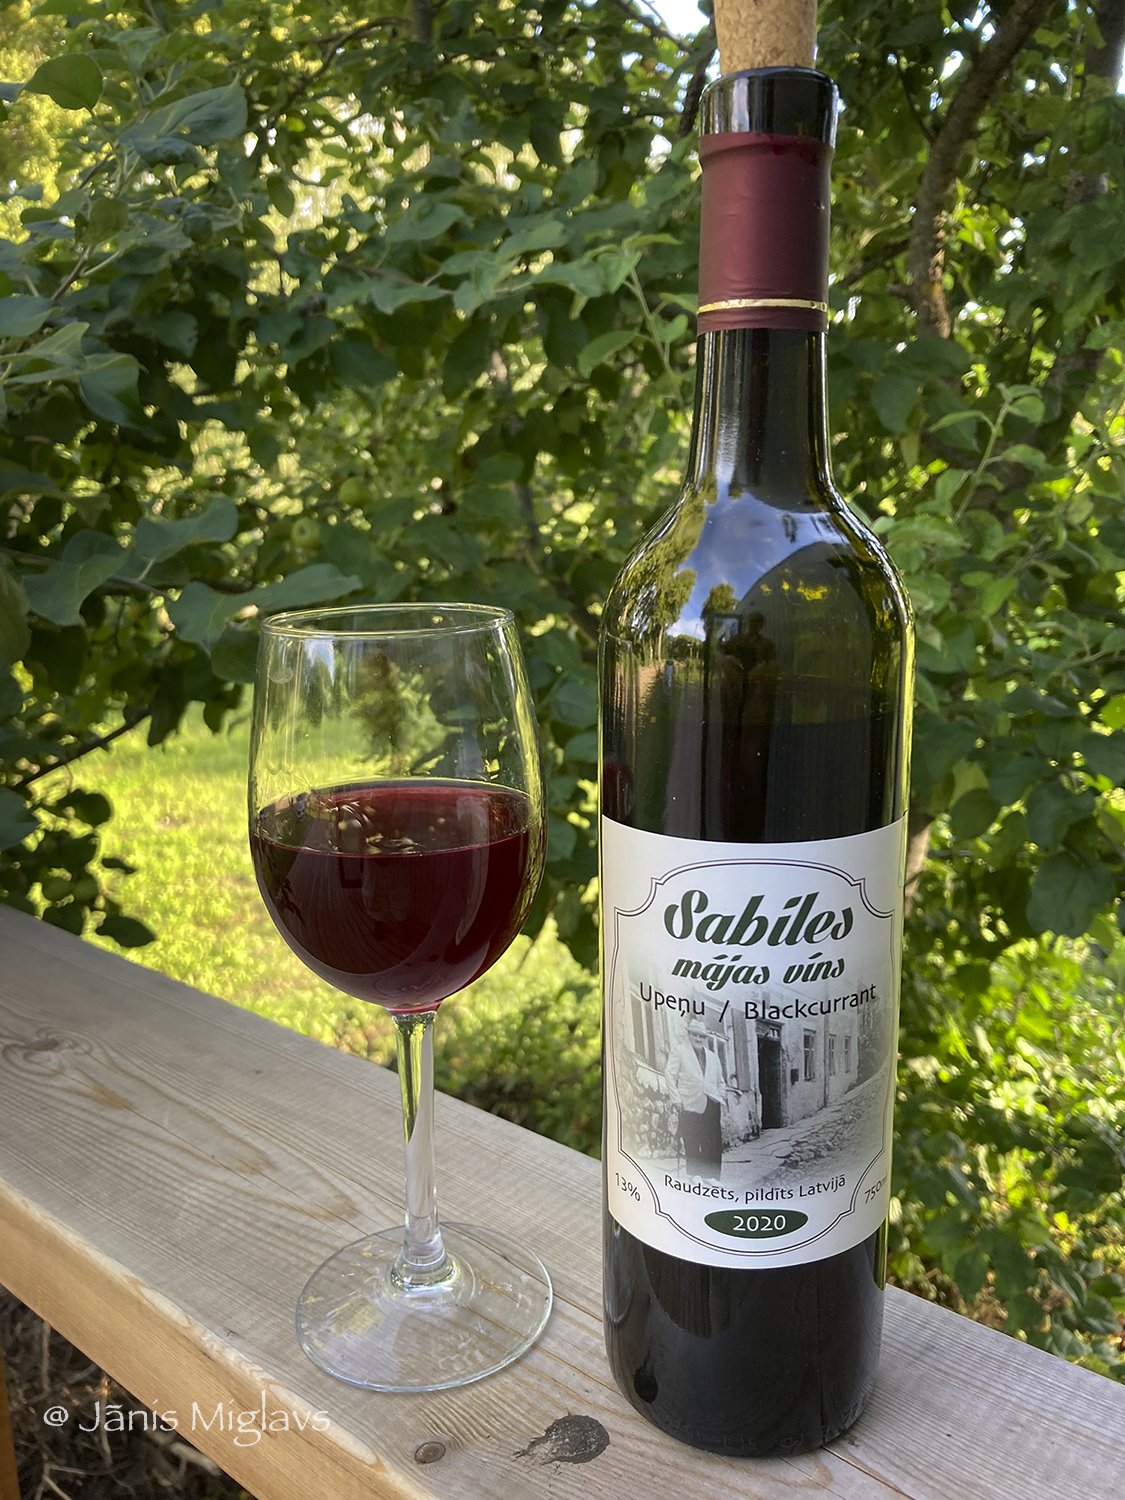 Latvia makes grape wine